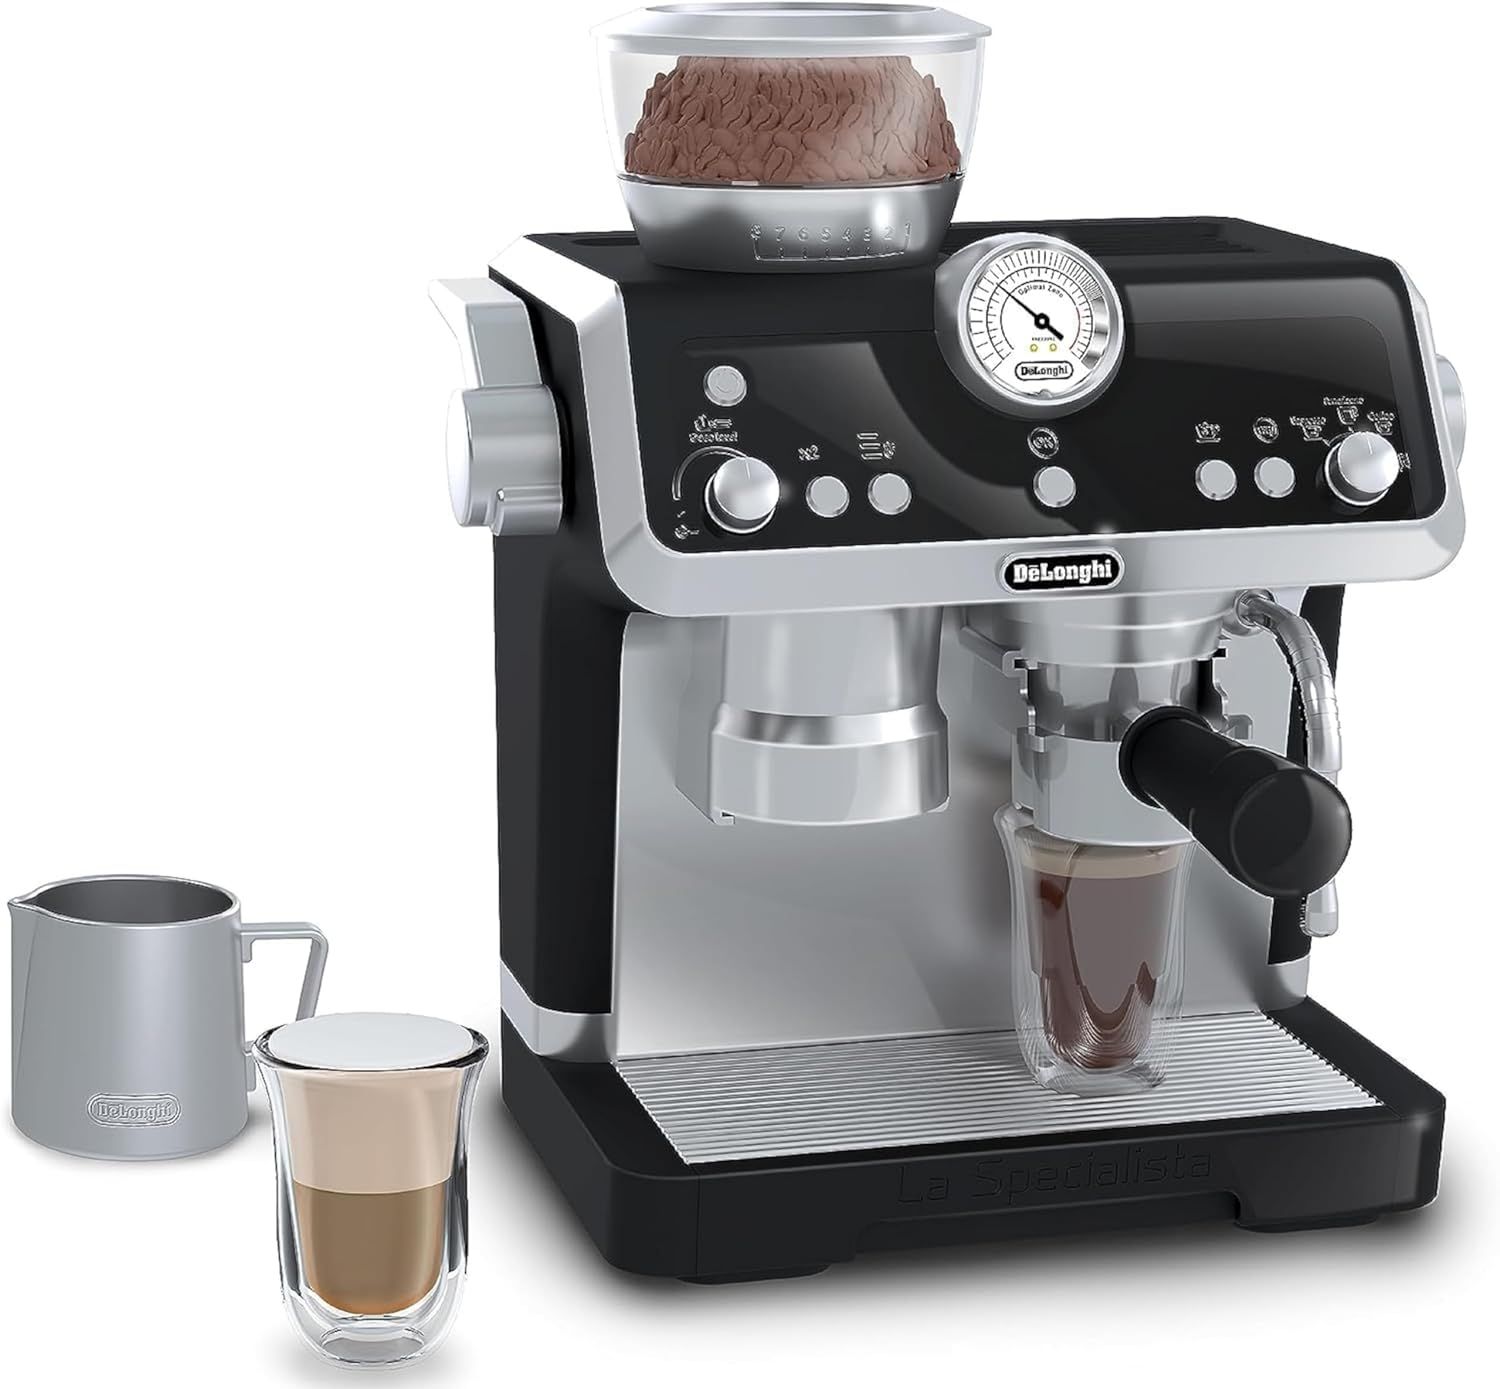 Casdon DeLonghi Barista Coffee Machine. Toy Coffee Machine For Children Aged 3+. Features Realist... | Amazon (US)